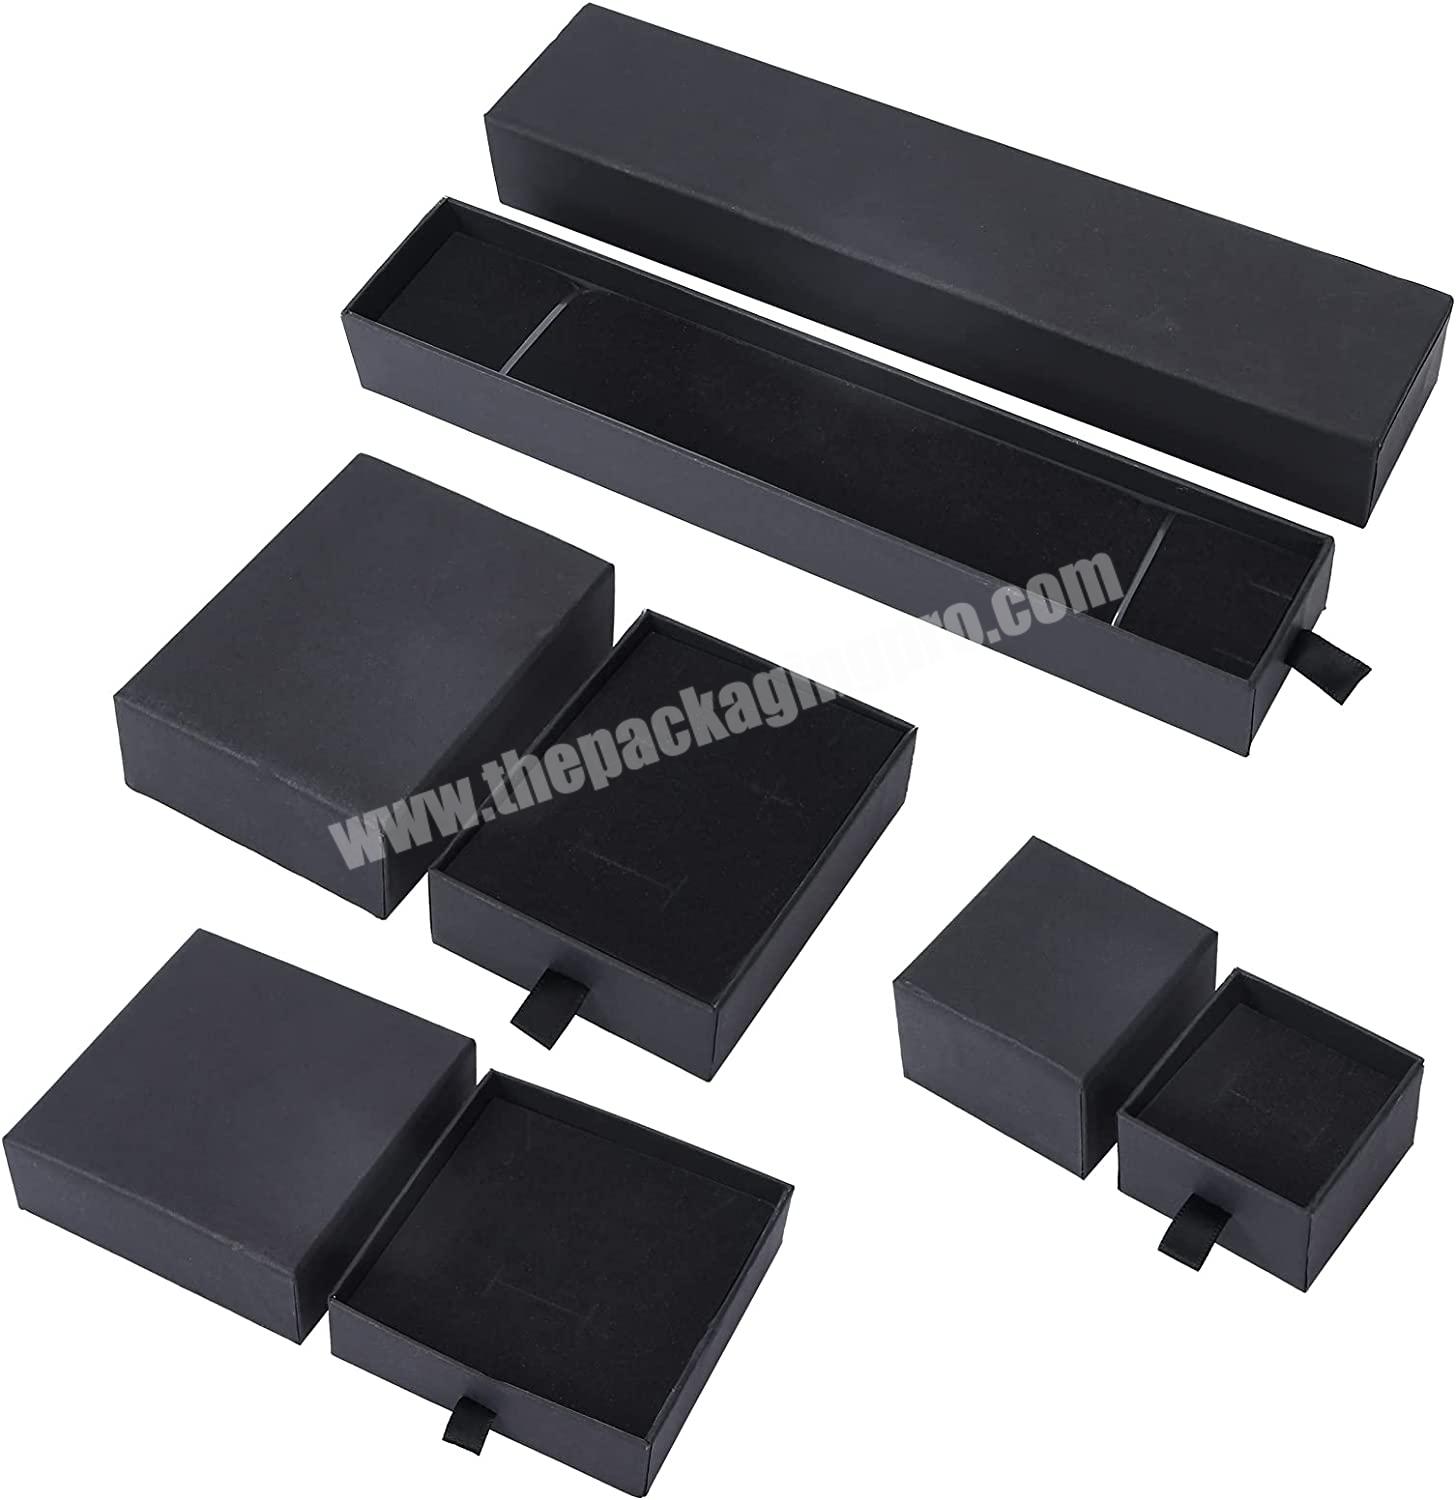 Luxury Black Earring Jewelry Paper Packaging Box Rigid Cardboard Drawer Gift Boxes with Sponge Insert